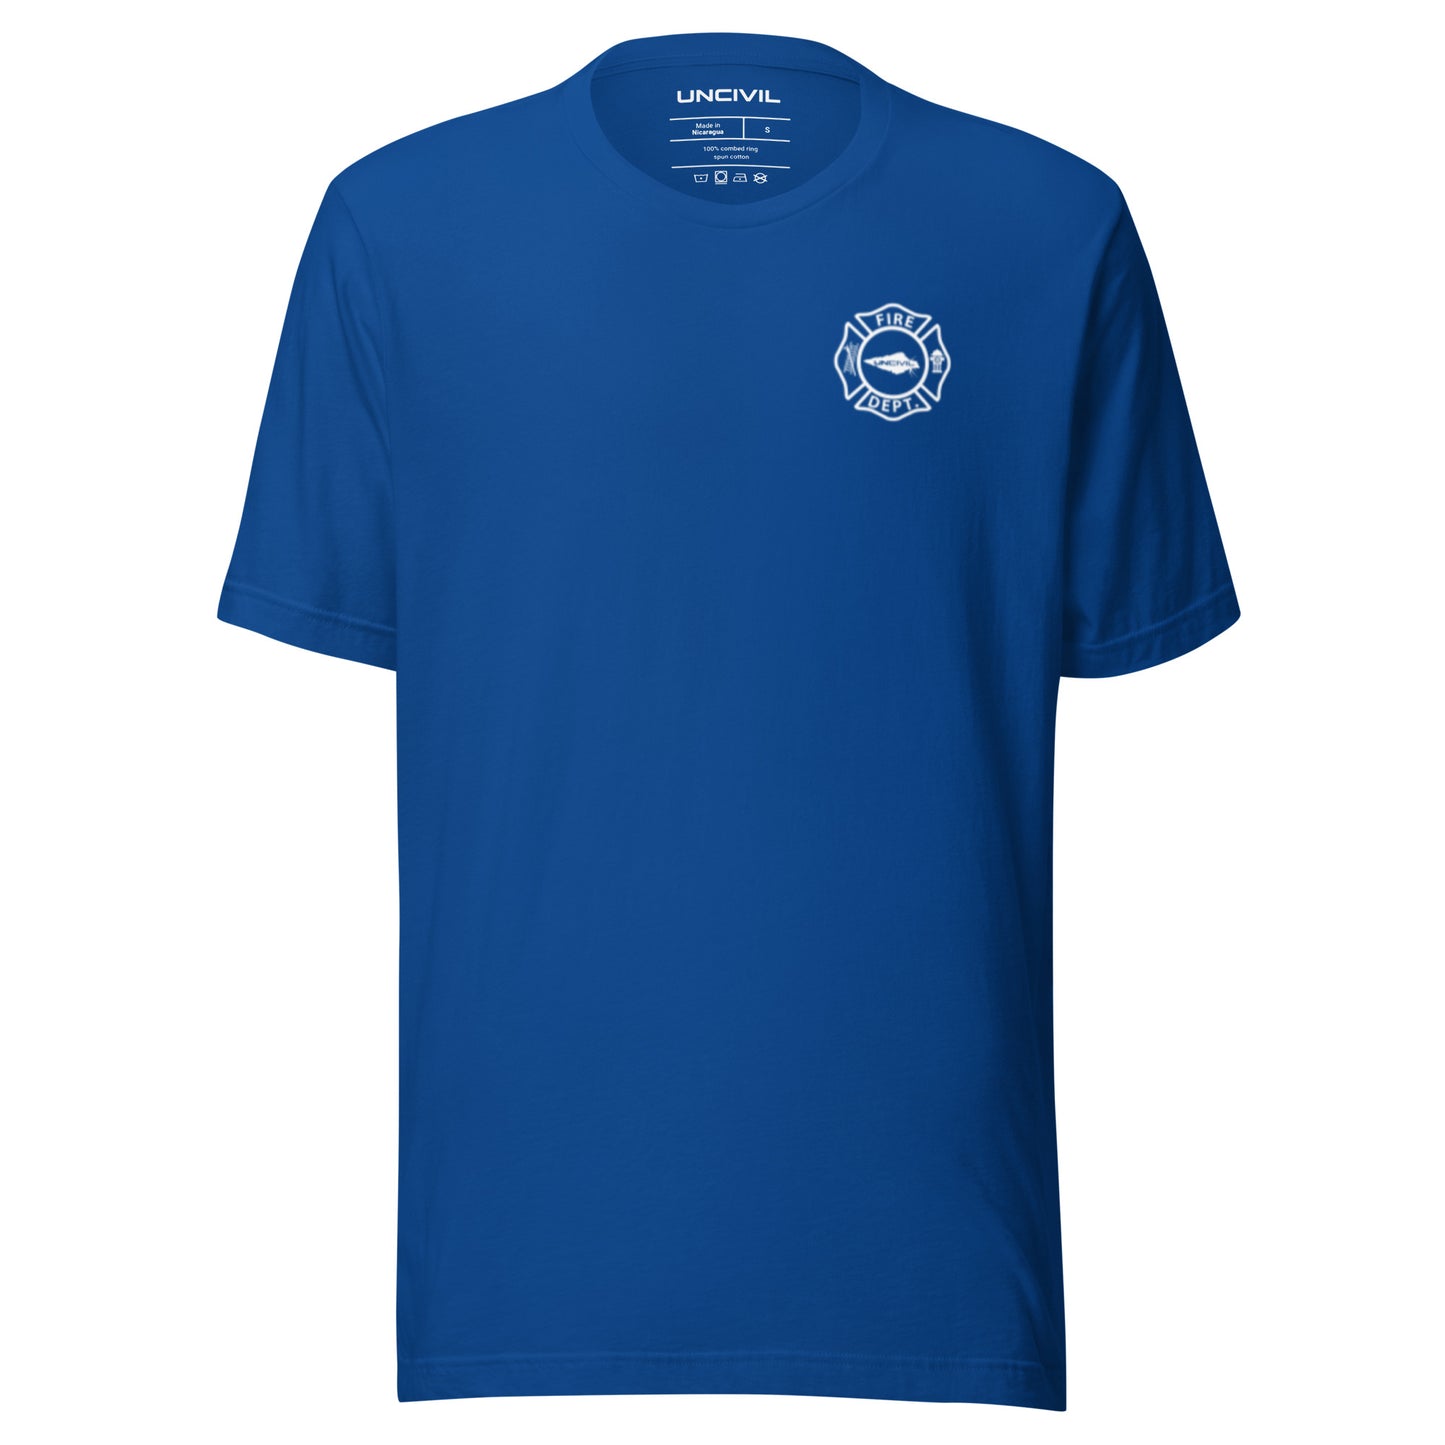 Keys to the City Halligan shirt, Royal blue unisex t-shirt with maltese cross